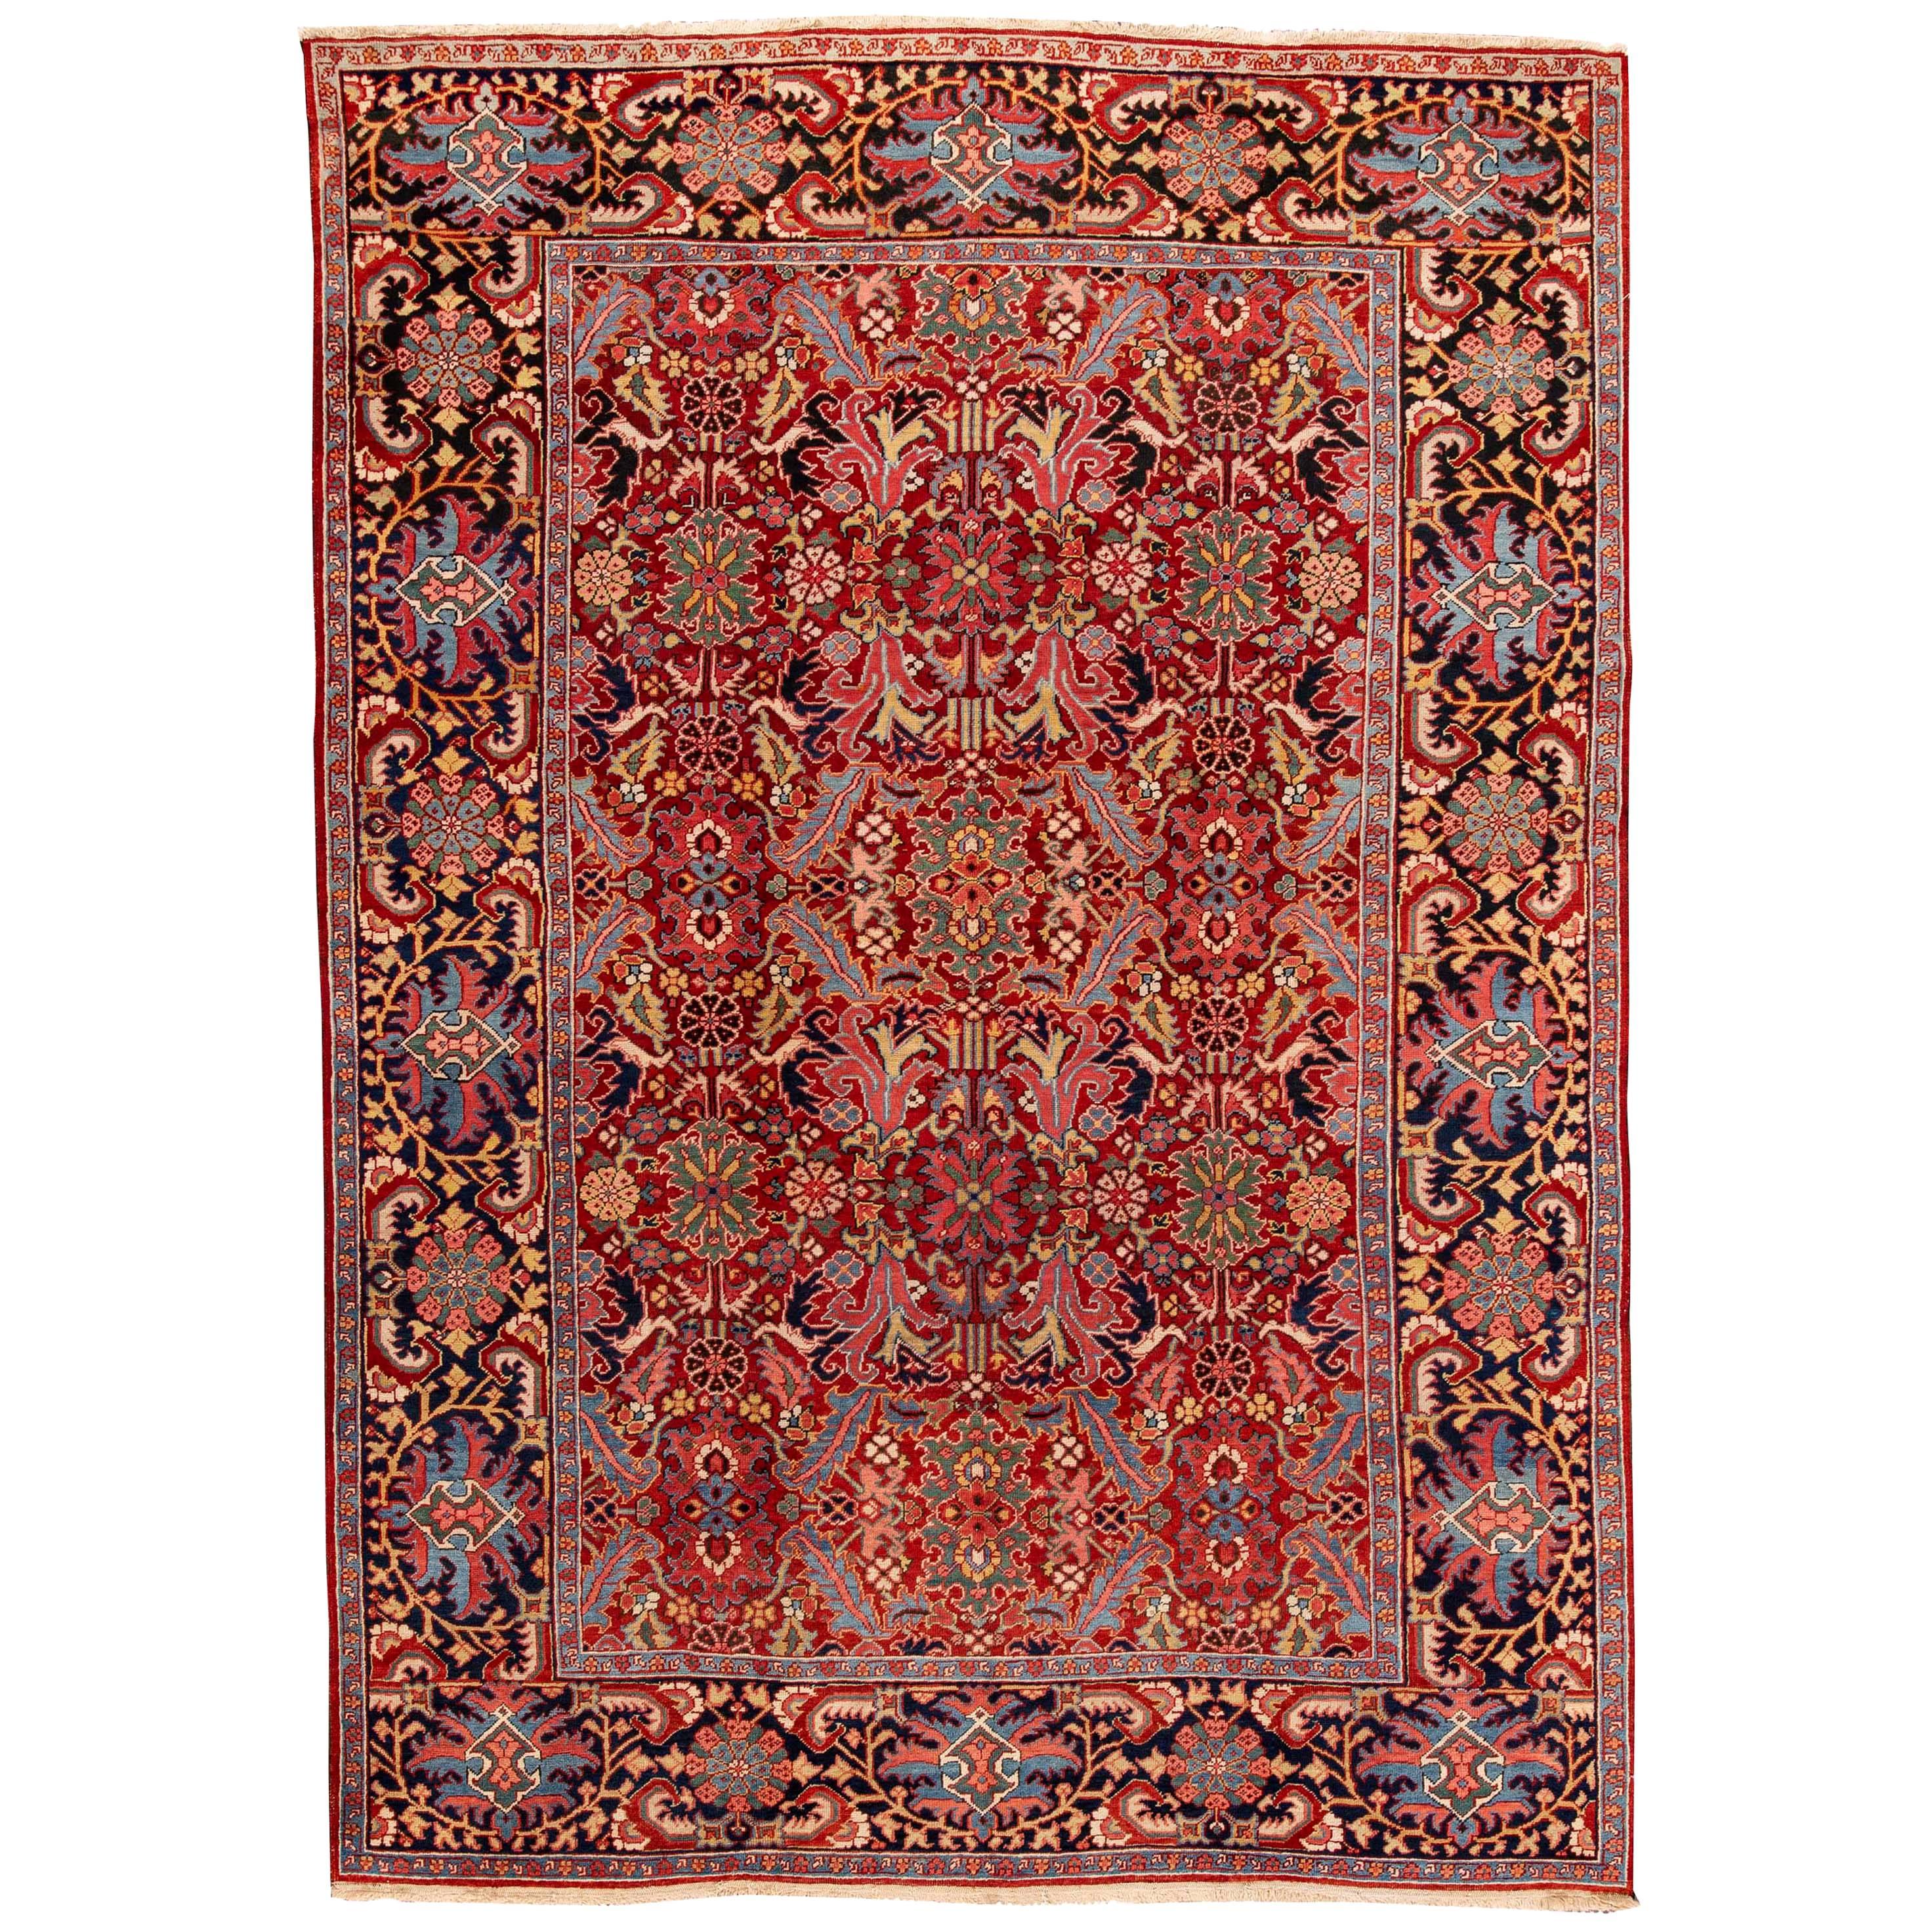 Early 20th Century Antique Persian Fine Heriz Wool Rug